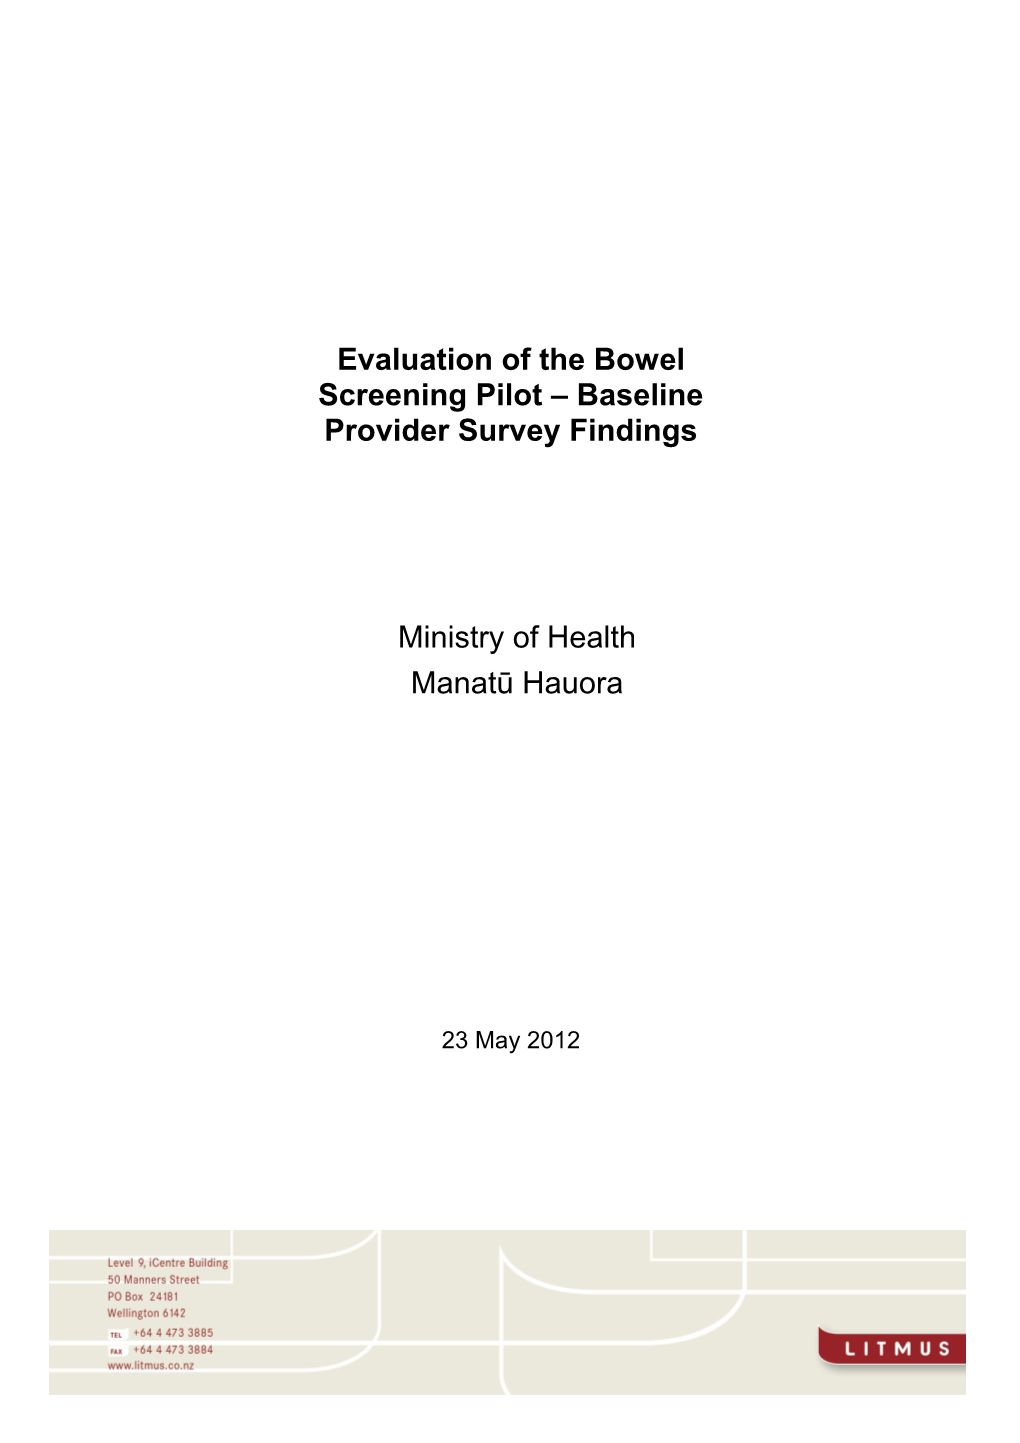 Evaluation of the Bowel Screening Pilot Baseline Provider Survey Findings